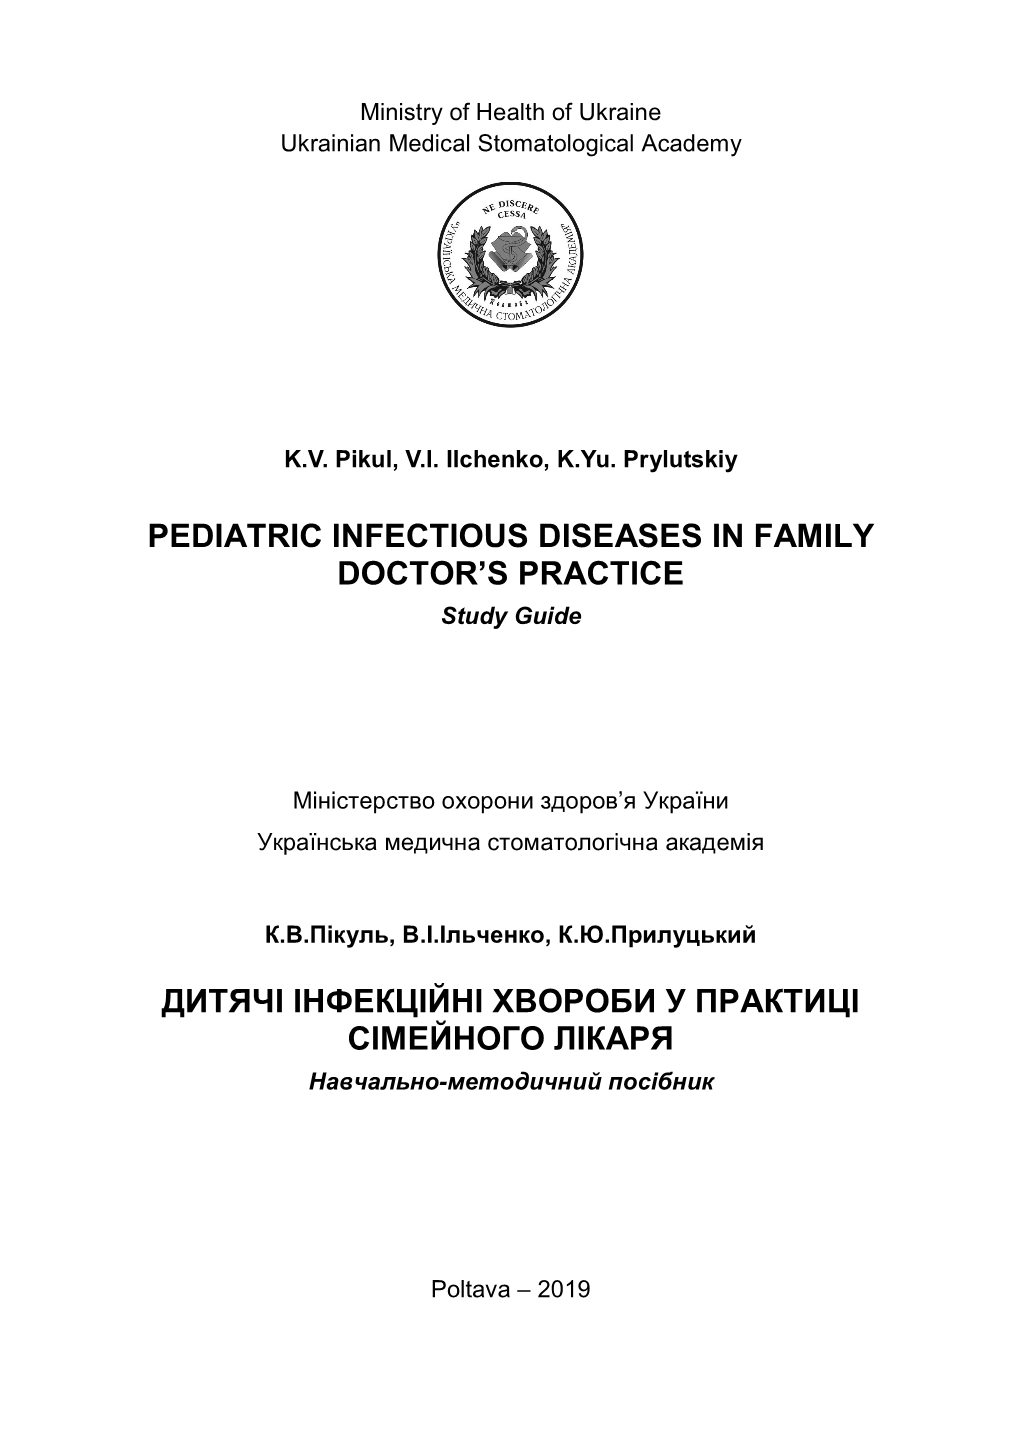 Pediatric Infectious Diseases in Family Doctor's Practice